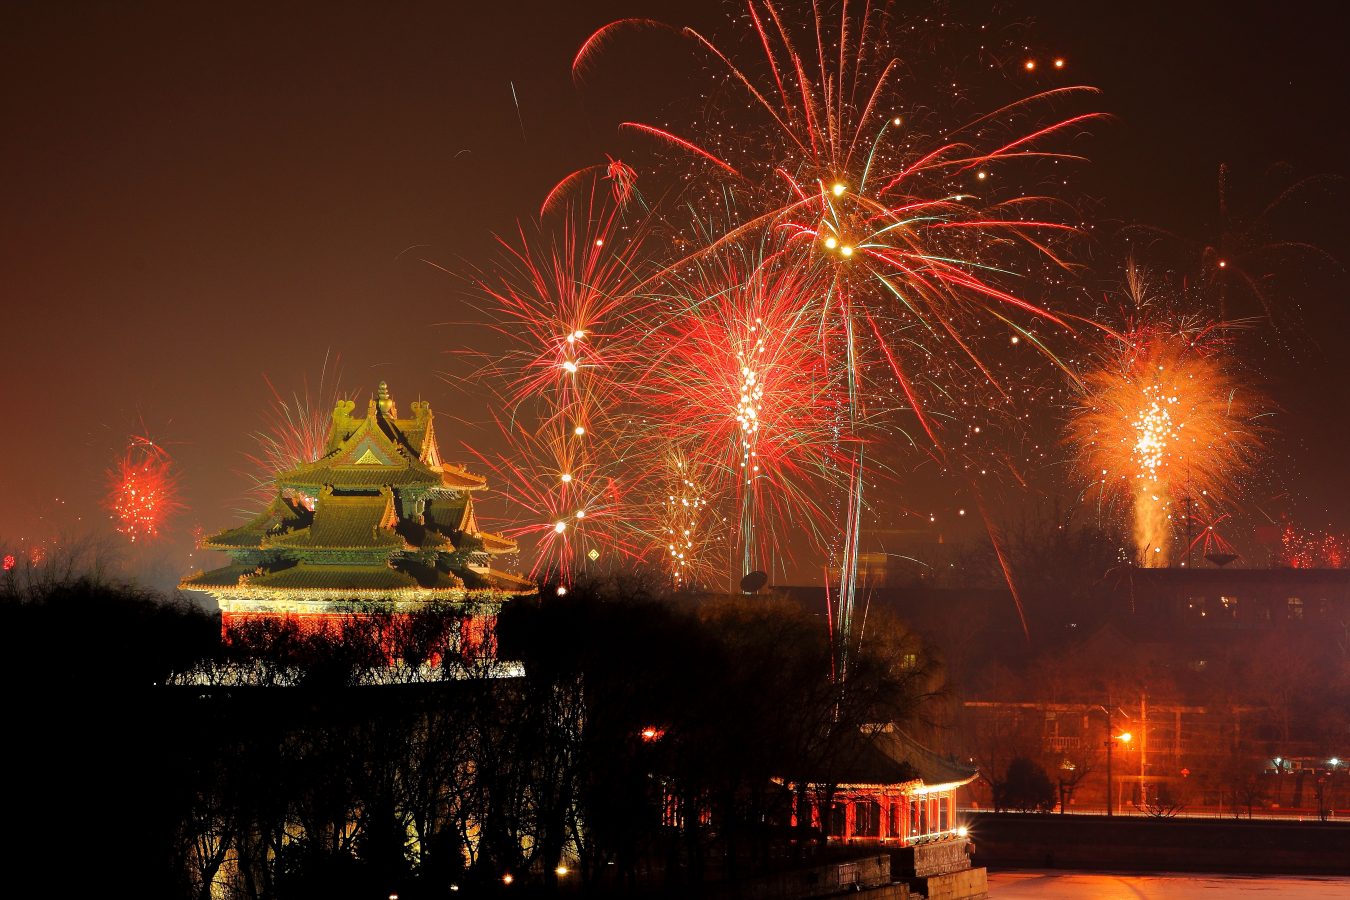 chinese new year celebrations